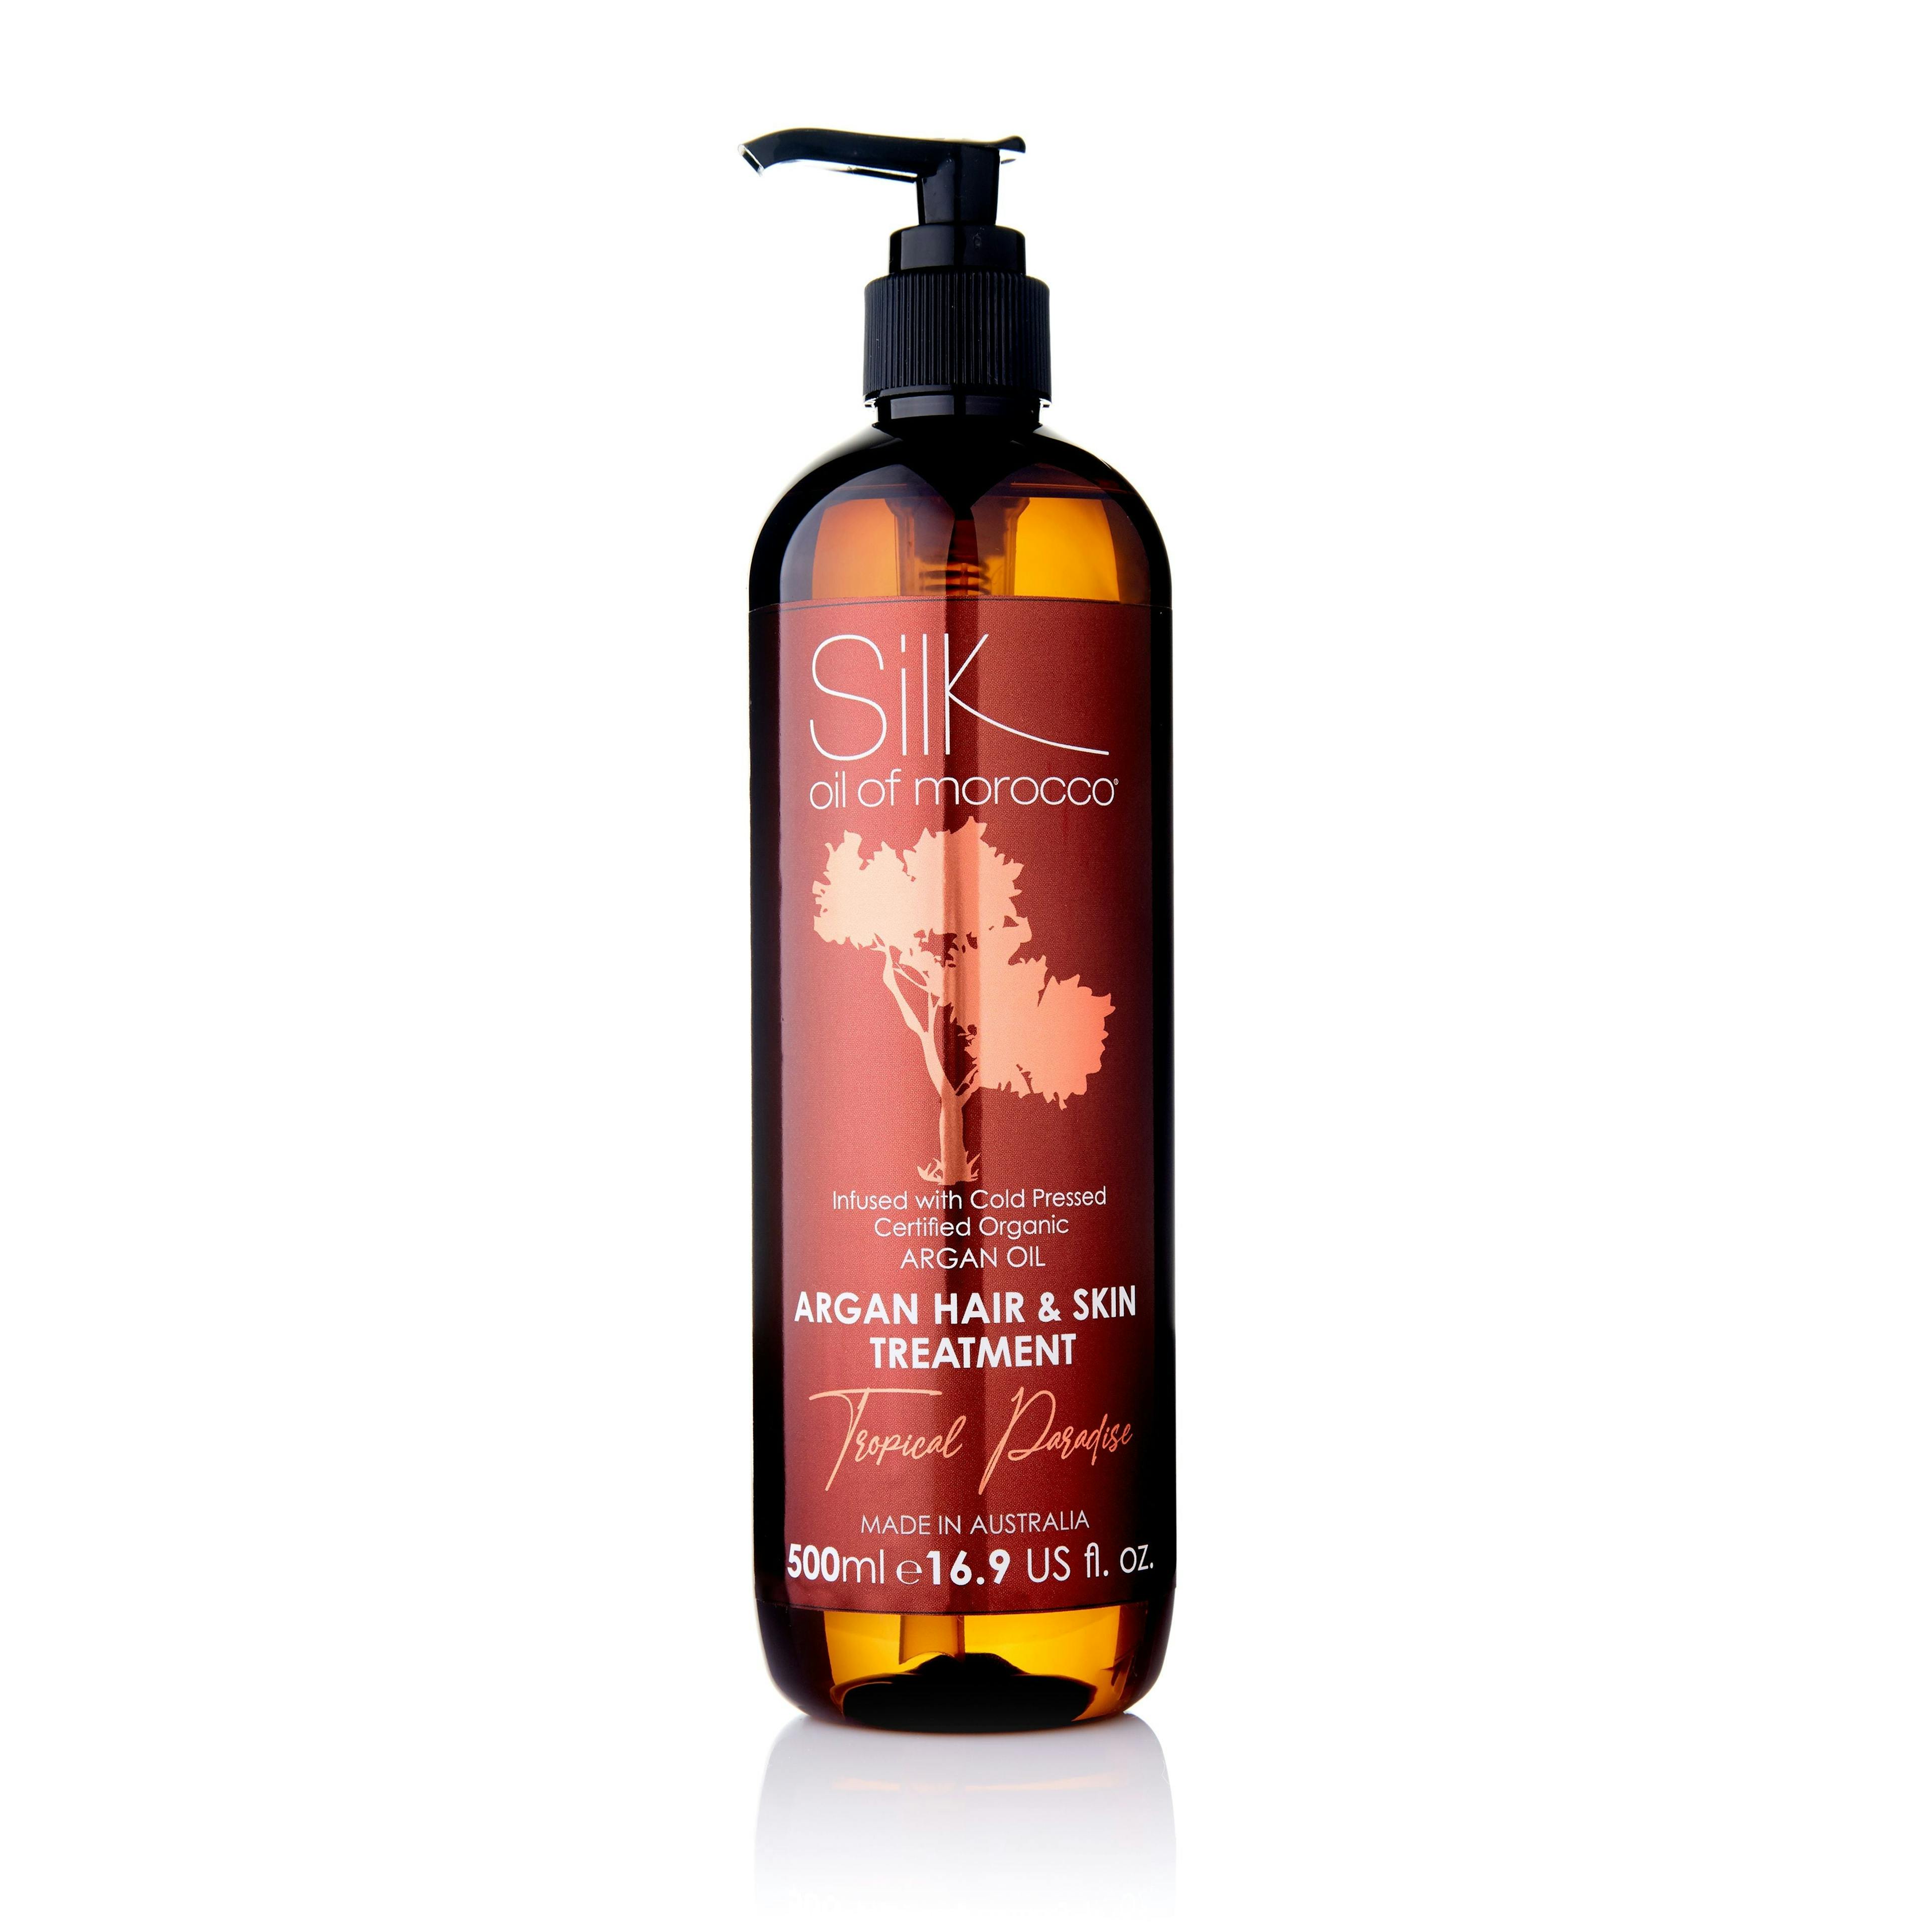 Silk Oil of Morocco Argan Hair & Skin Treatment - Tropical Paradise 500ml